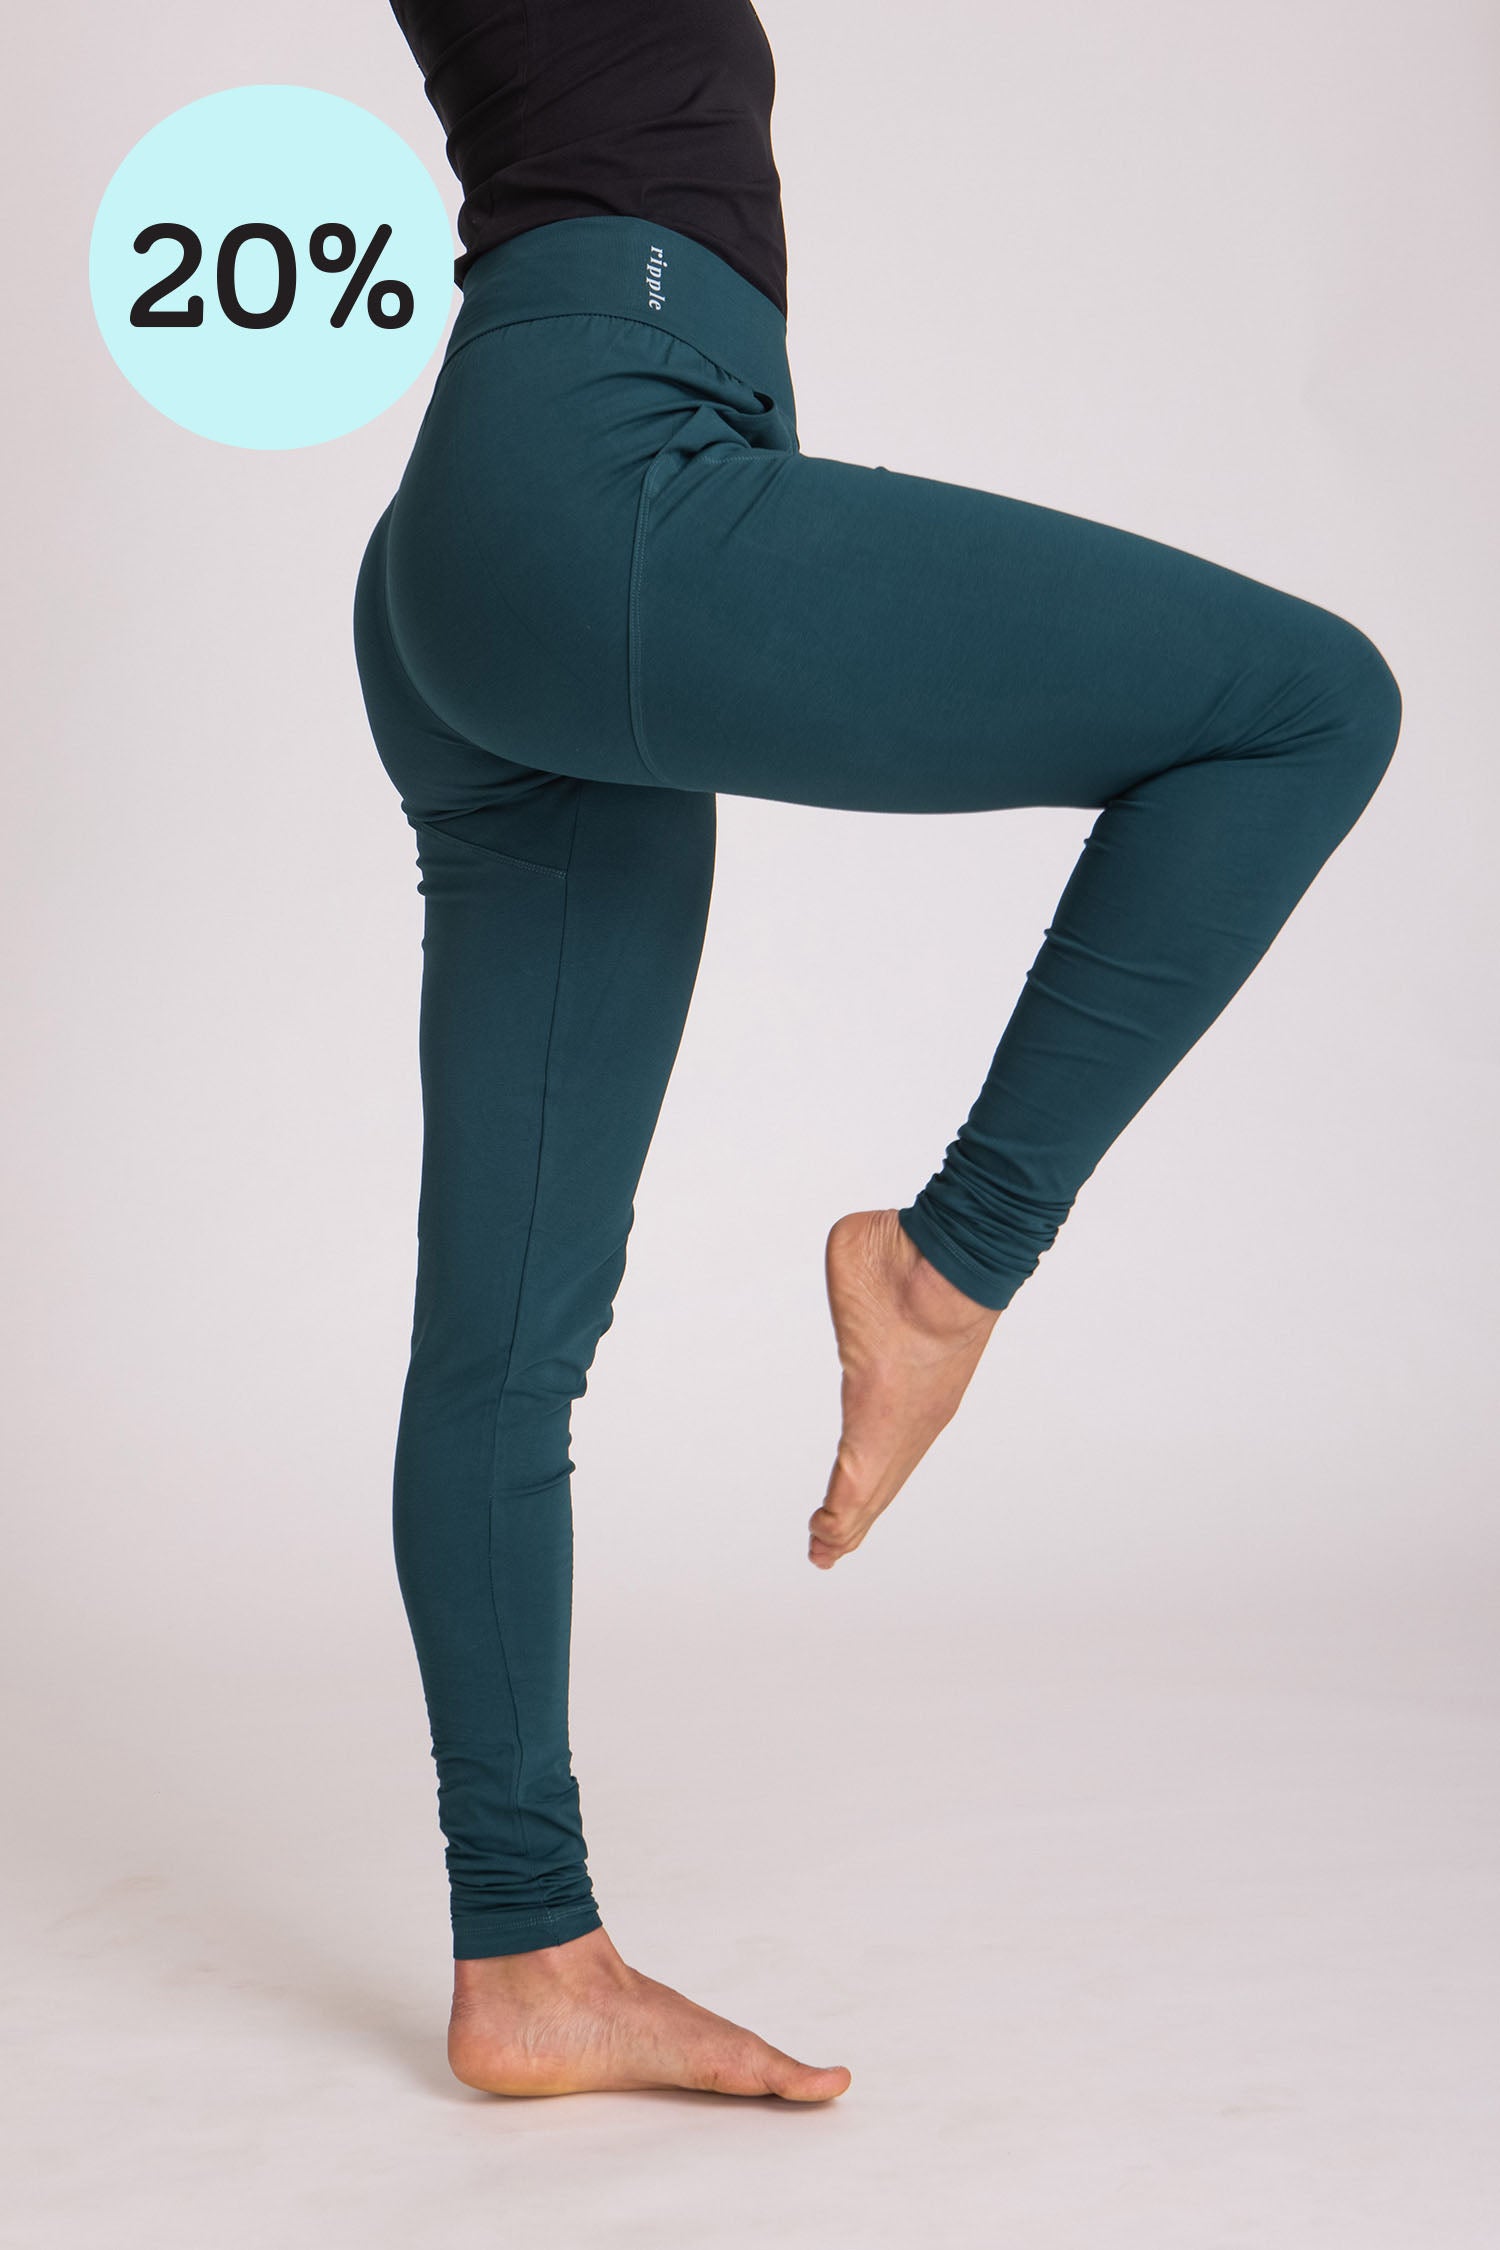 Printed Extra Long Women Yoga Leggings High Waist Belly Control Over The  Heel Yoga Pants Women Yoga Pants Printed Over The Heel High Waist Flex  Leggings,Green,L : Amazon.nl: Fashion